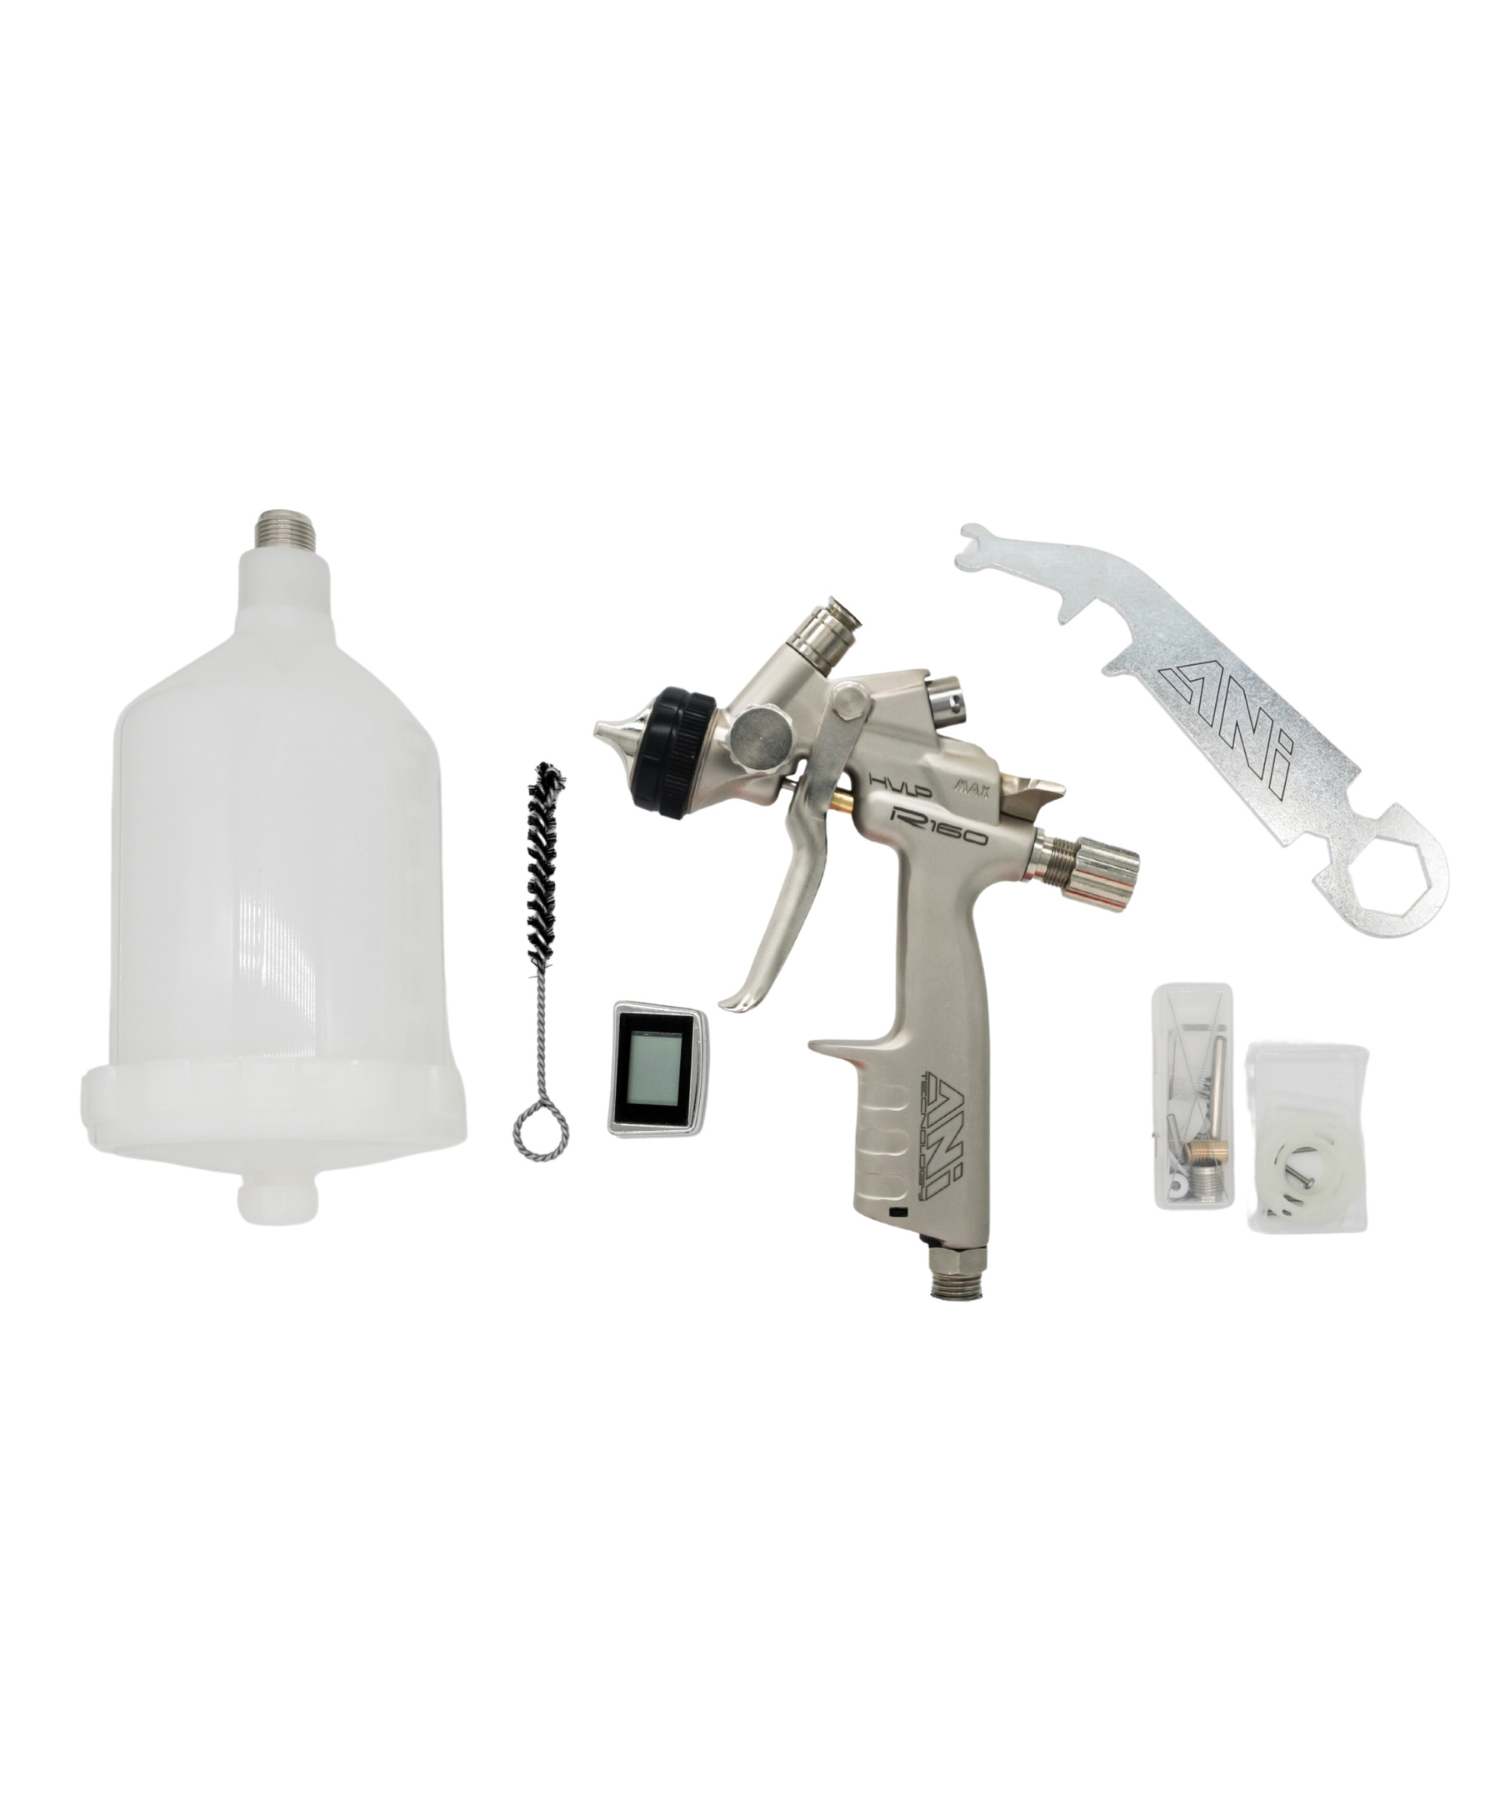 ANI HVLP R160 Professional Spray Gun Kit